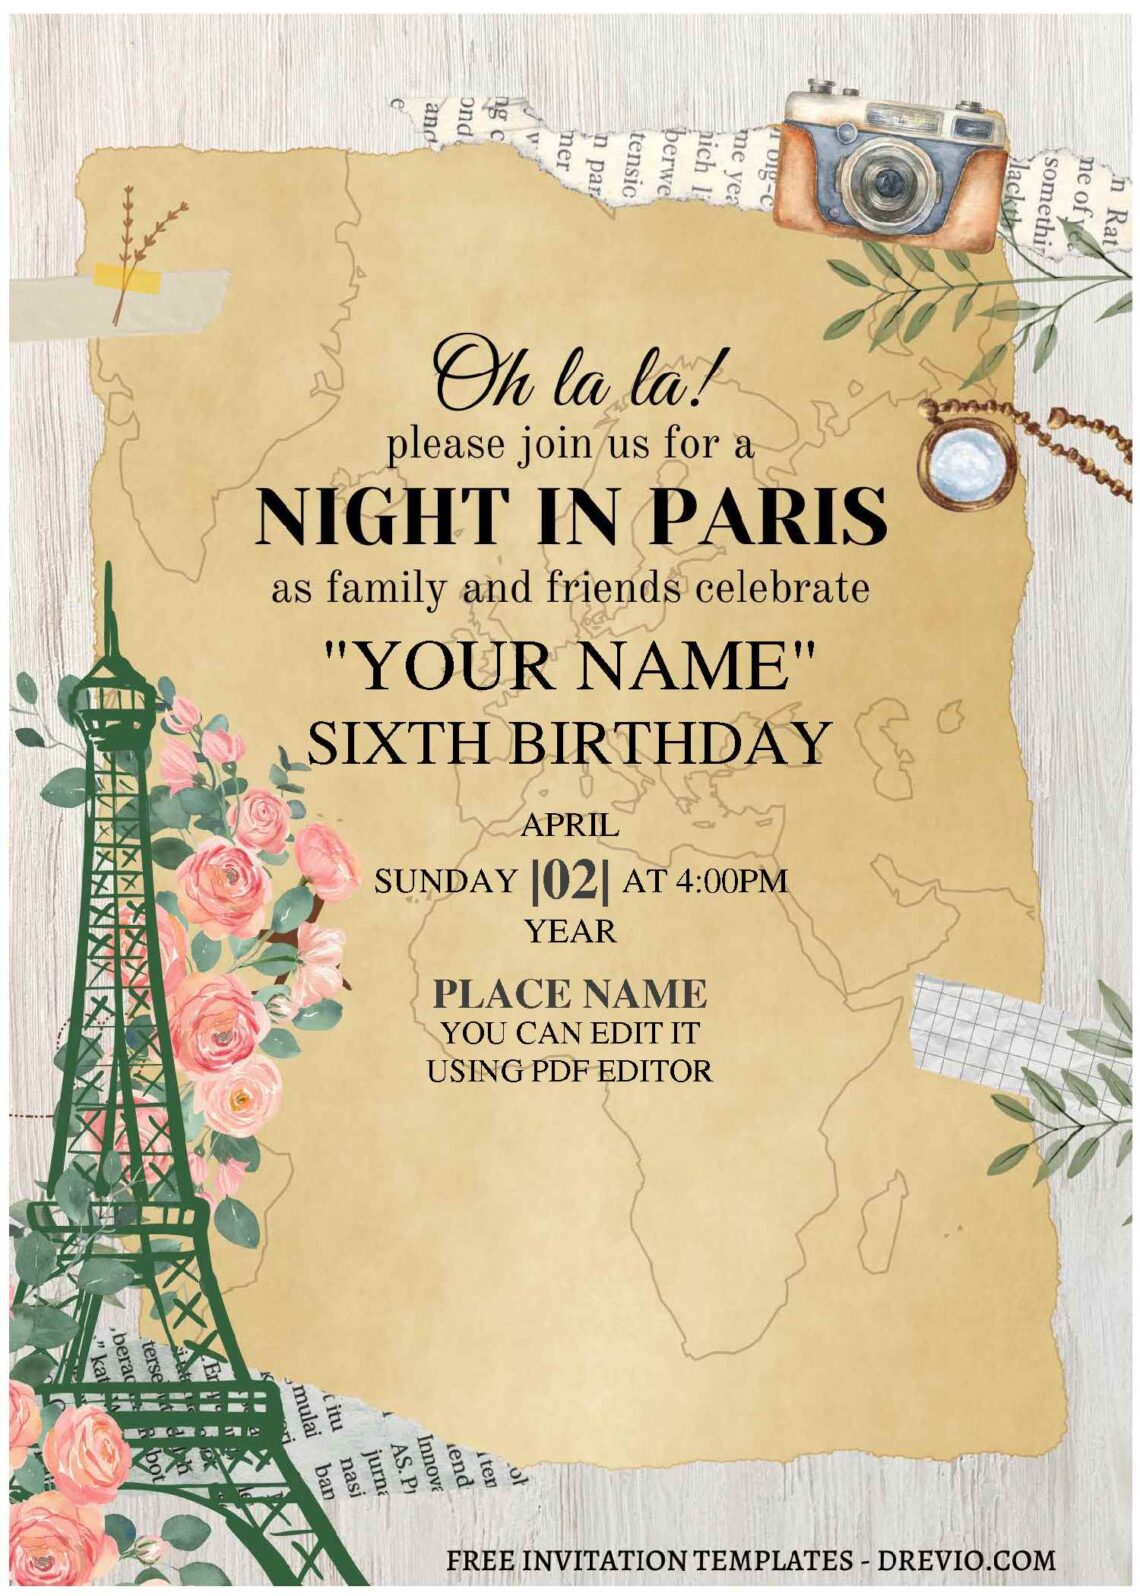 (Free Editable PDF) Oh La-La Paris Birthday Party Invitation Templates B